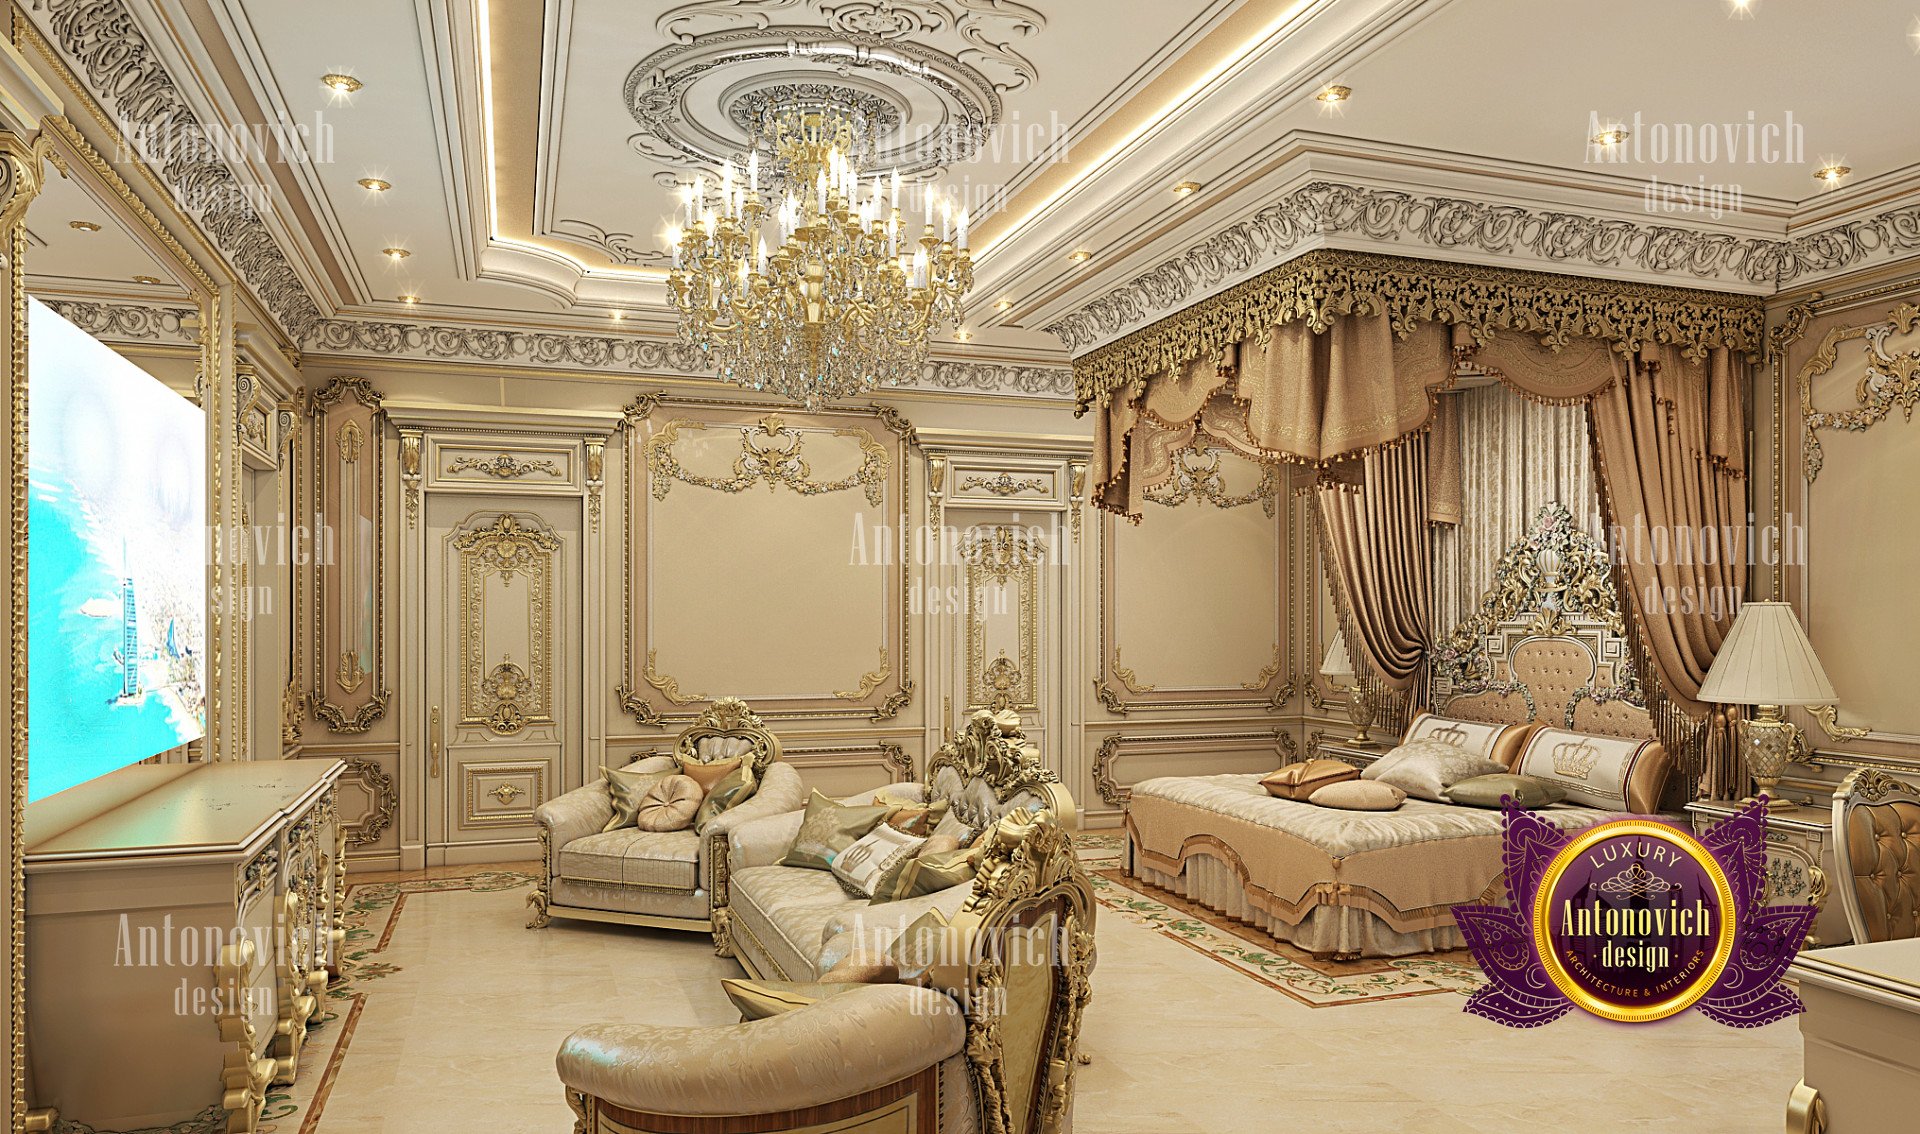 Amazing luxury bedroom